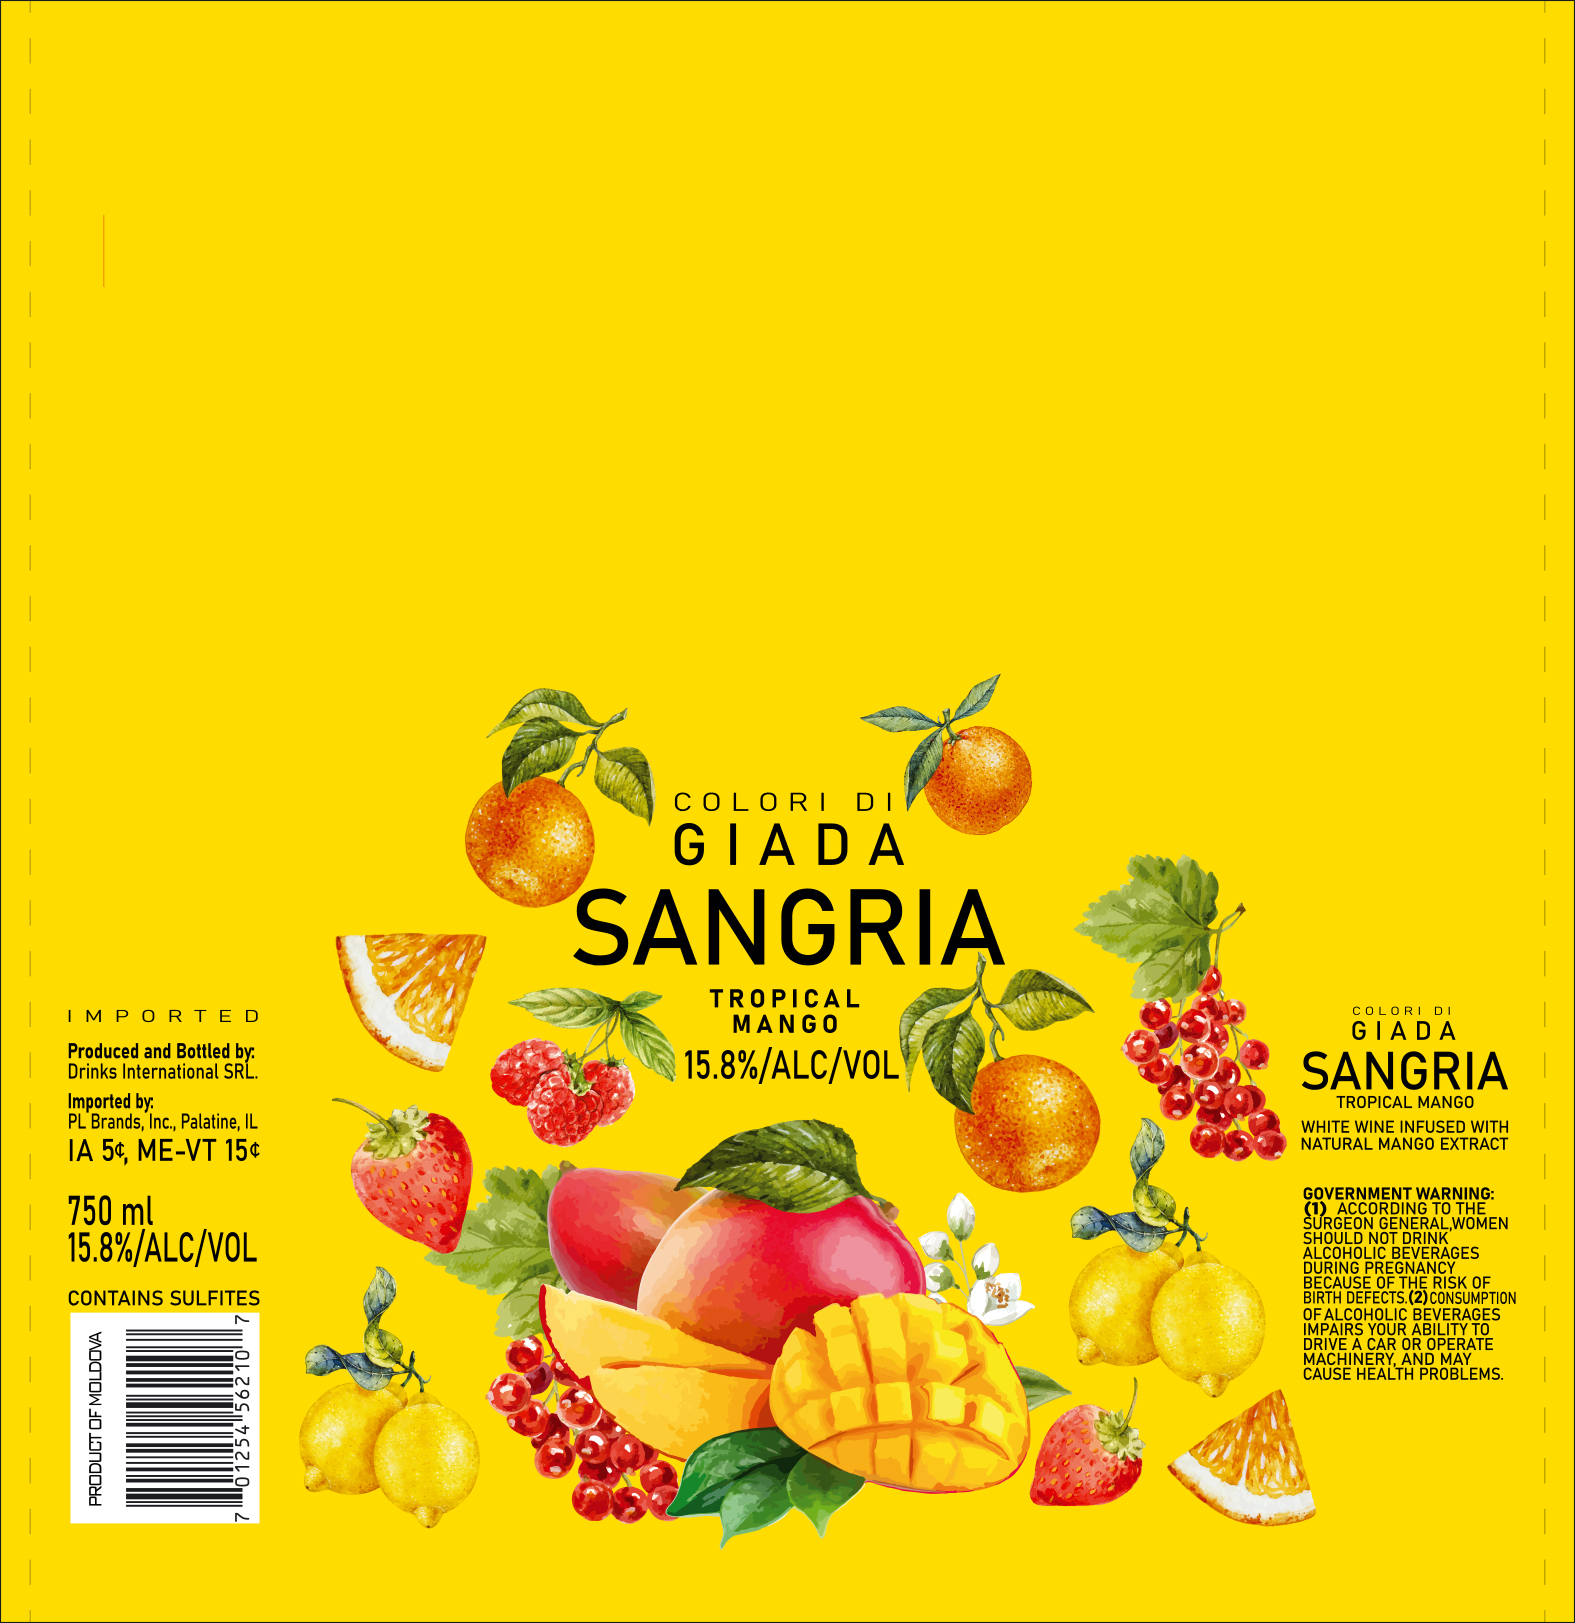 Colori Di Giada Sangria Tropical Mango 750 ml 12 units per case 25.4 fl Product Label